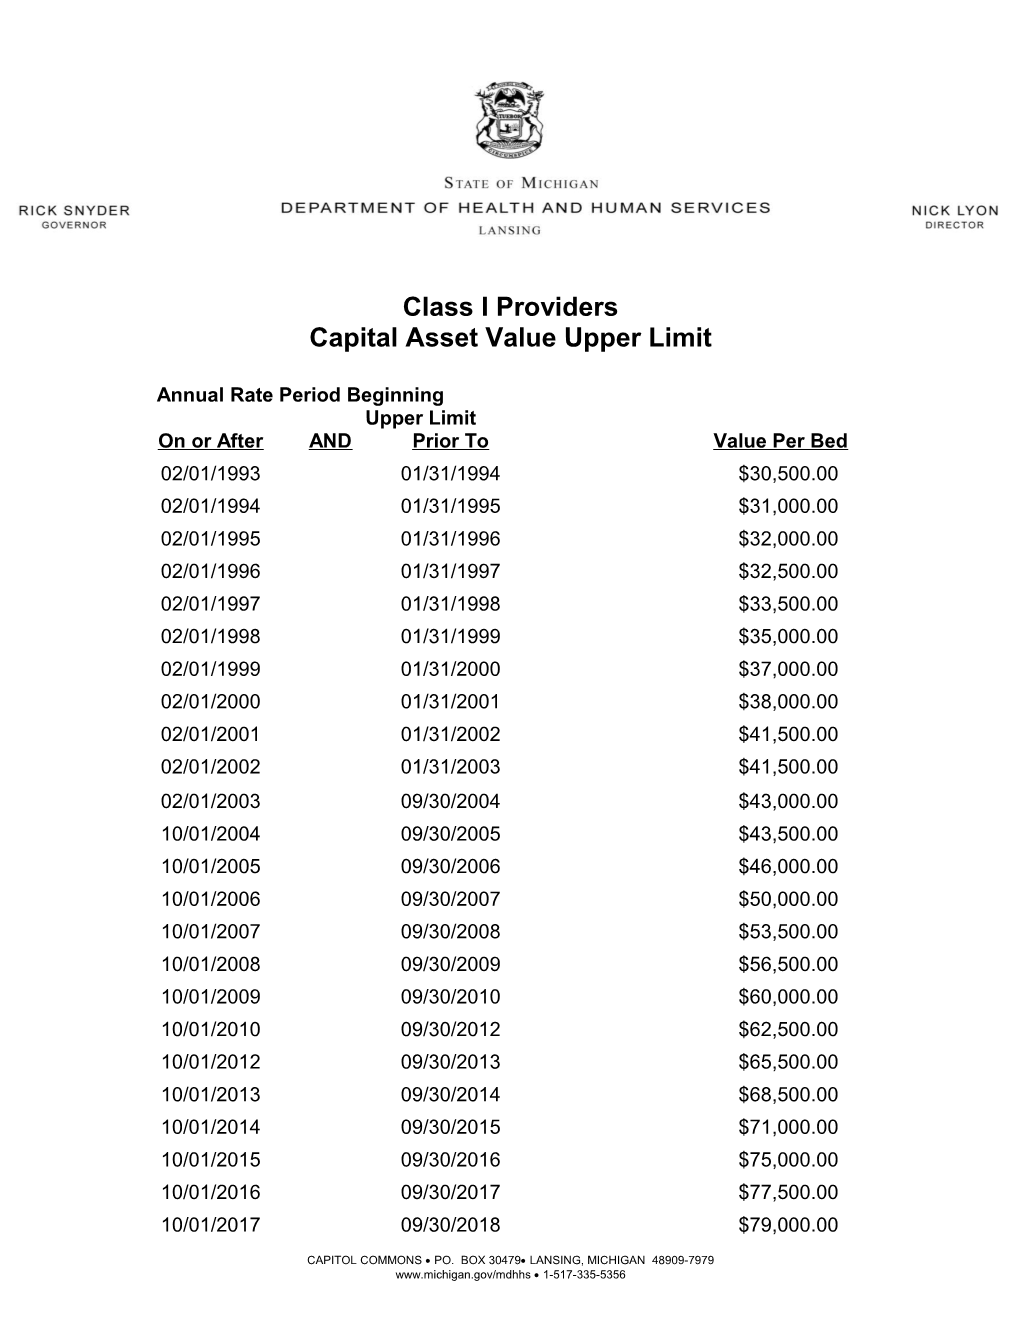 Capital Asset Value Upper Limit